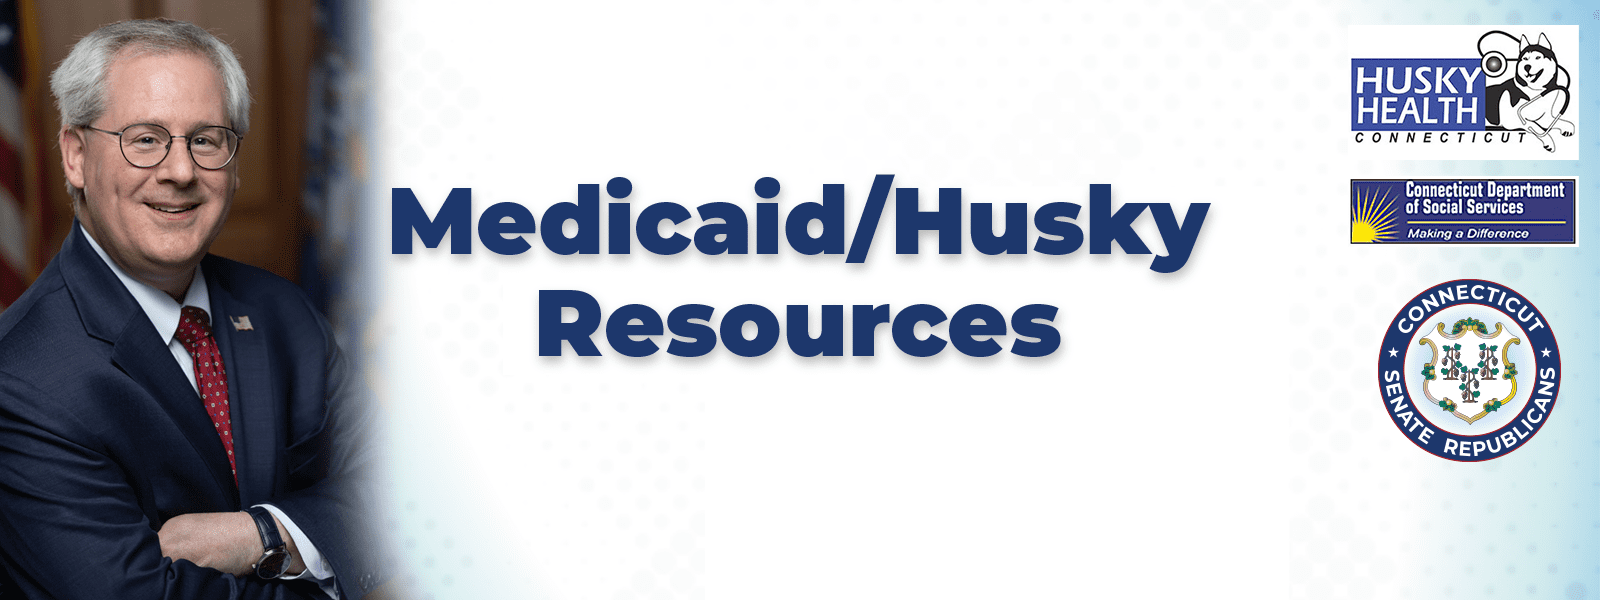 Medicaid/Husky Resources